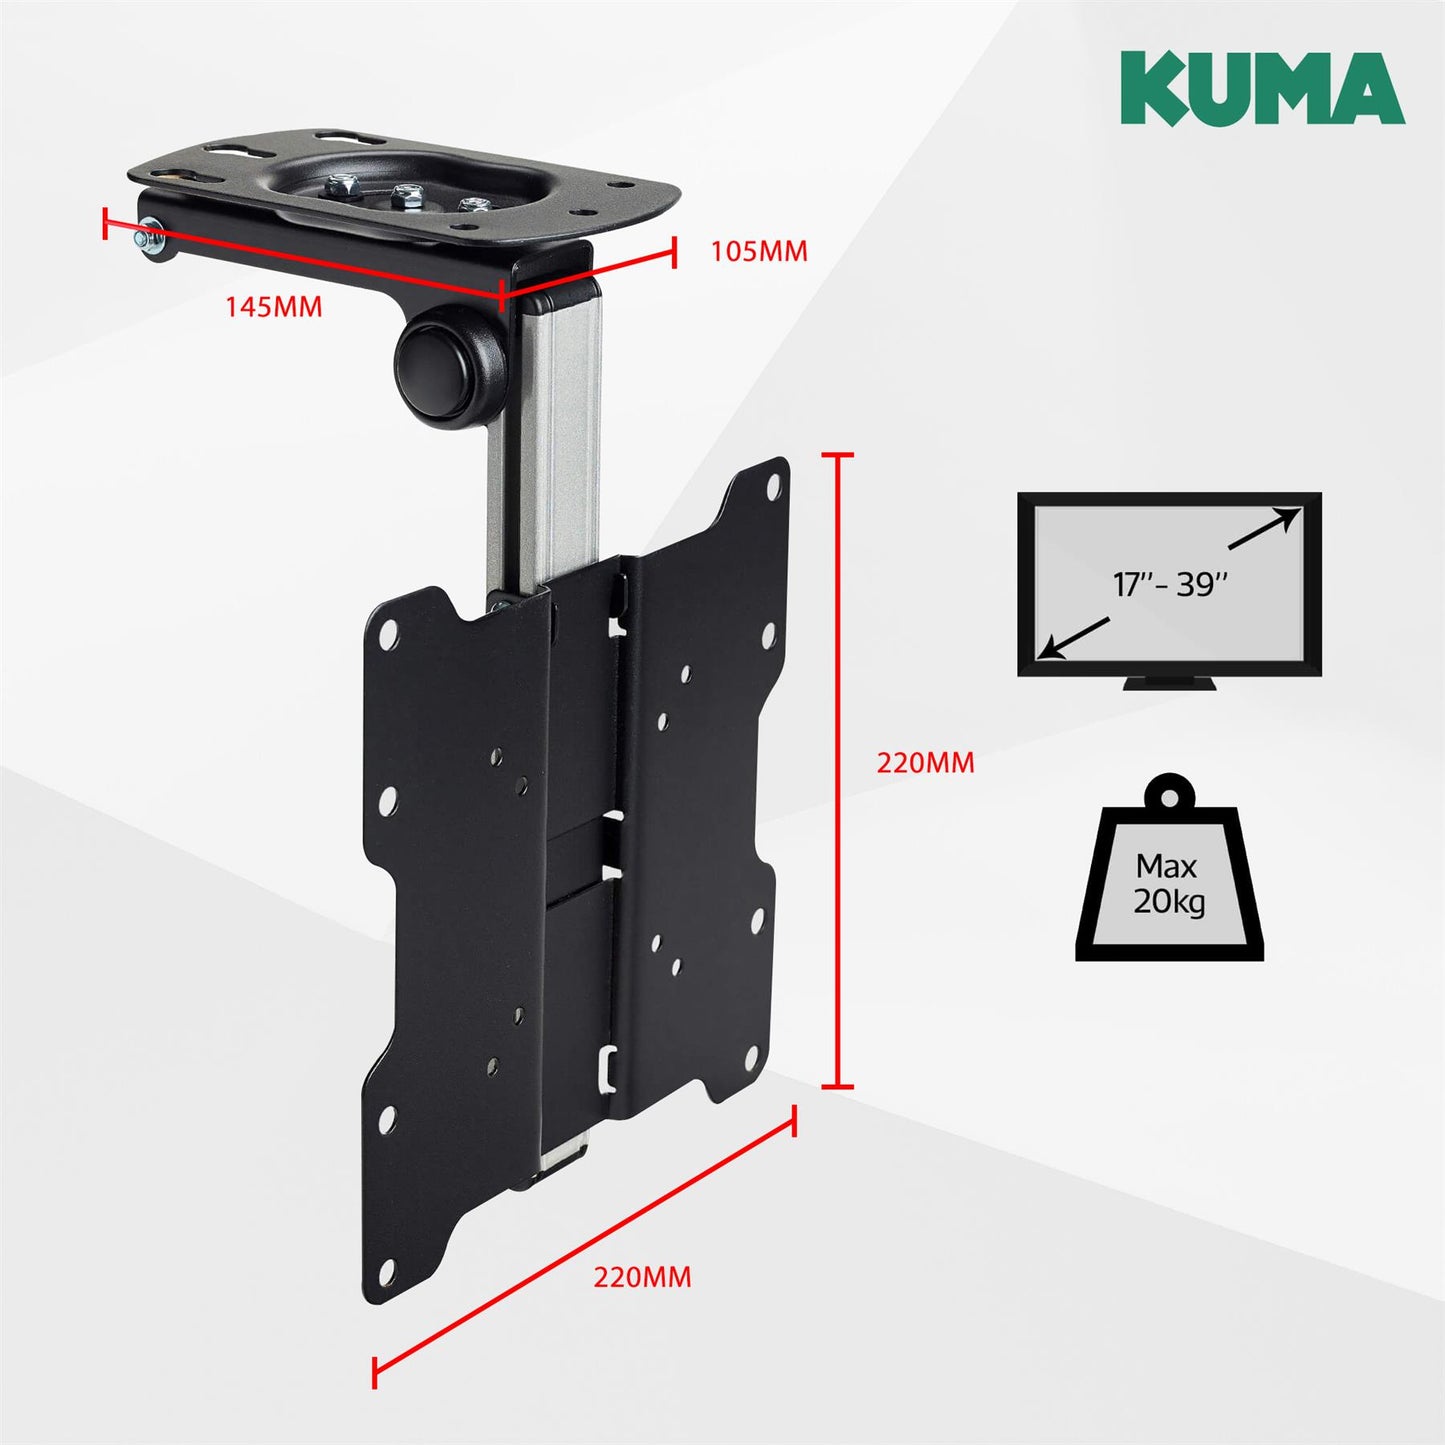 KUMA TV Wall Bracket - Tilt Swivel Folding VESA Mount for Curve and Flat Screen Television - Flip Down 17" 19" 22" 24" 26" 29" 32" 37" LCD LED Monitor - Ceiling or Under Cabinet - Slim & Universal